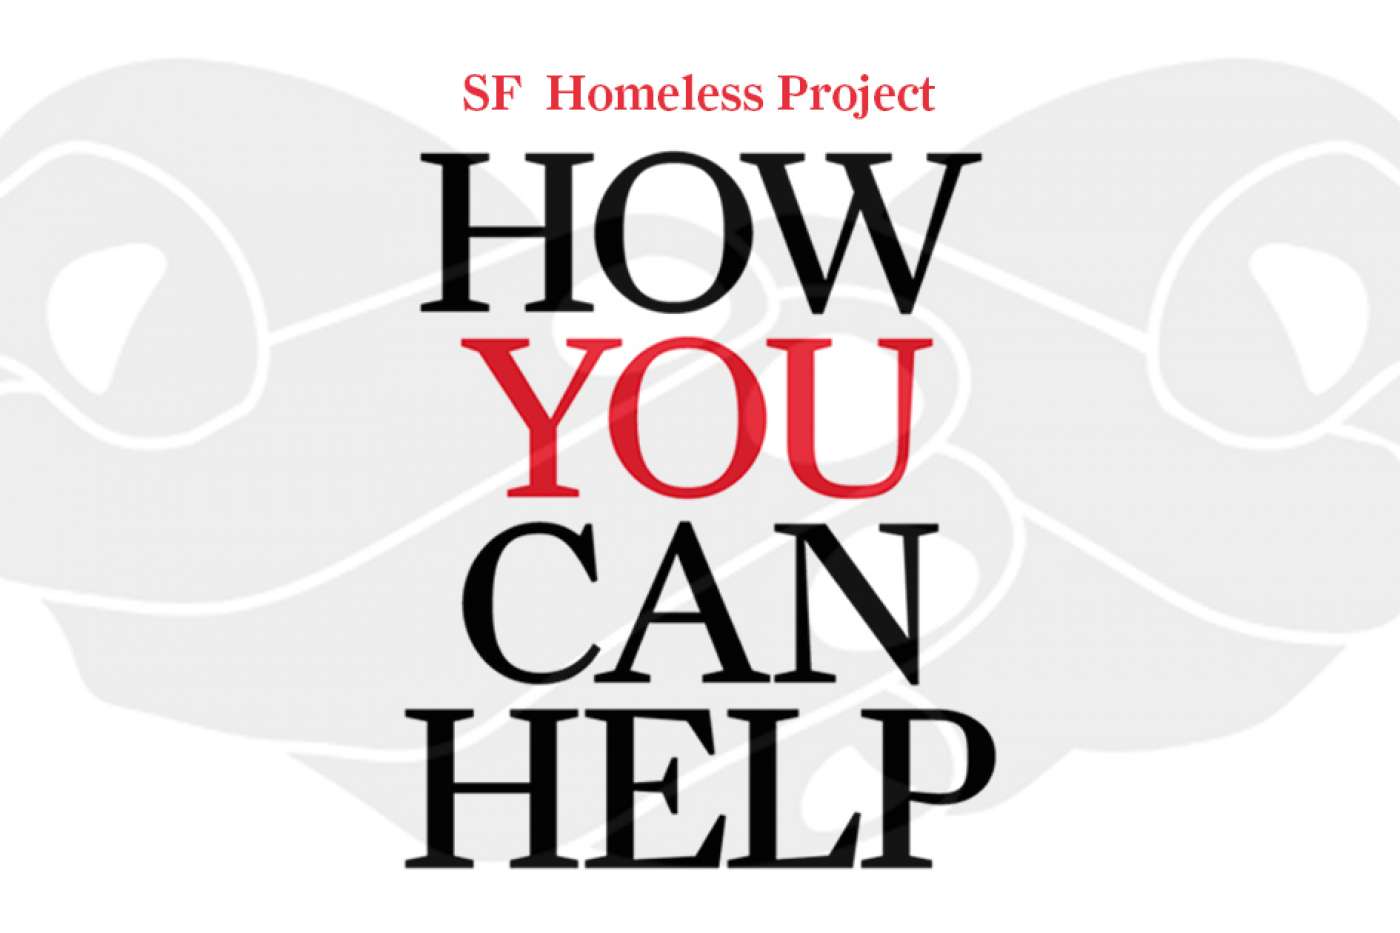 donation clipart homeless